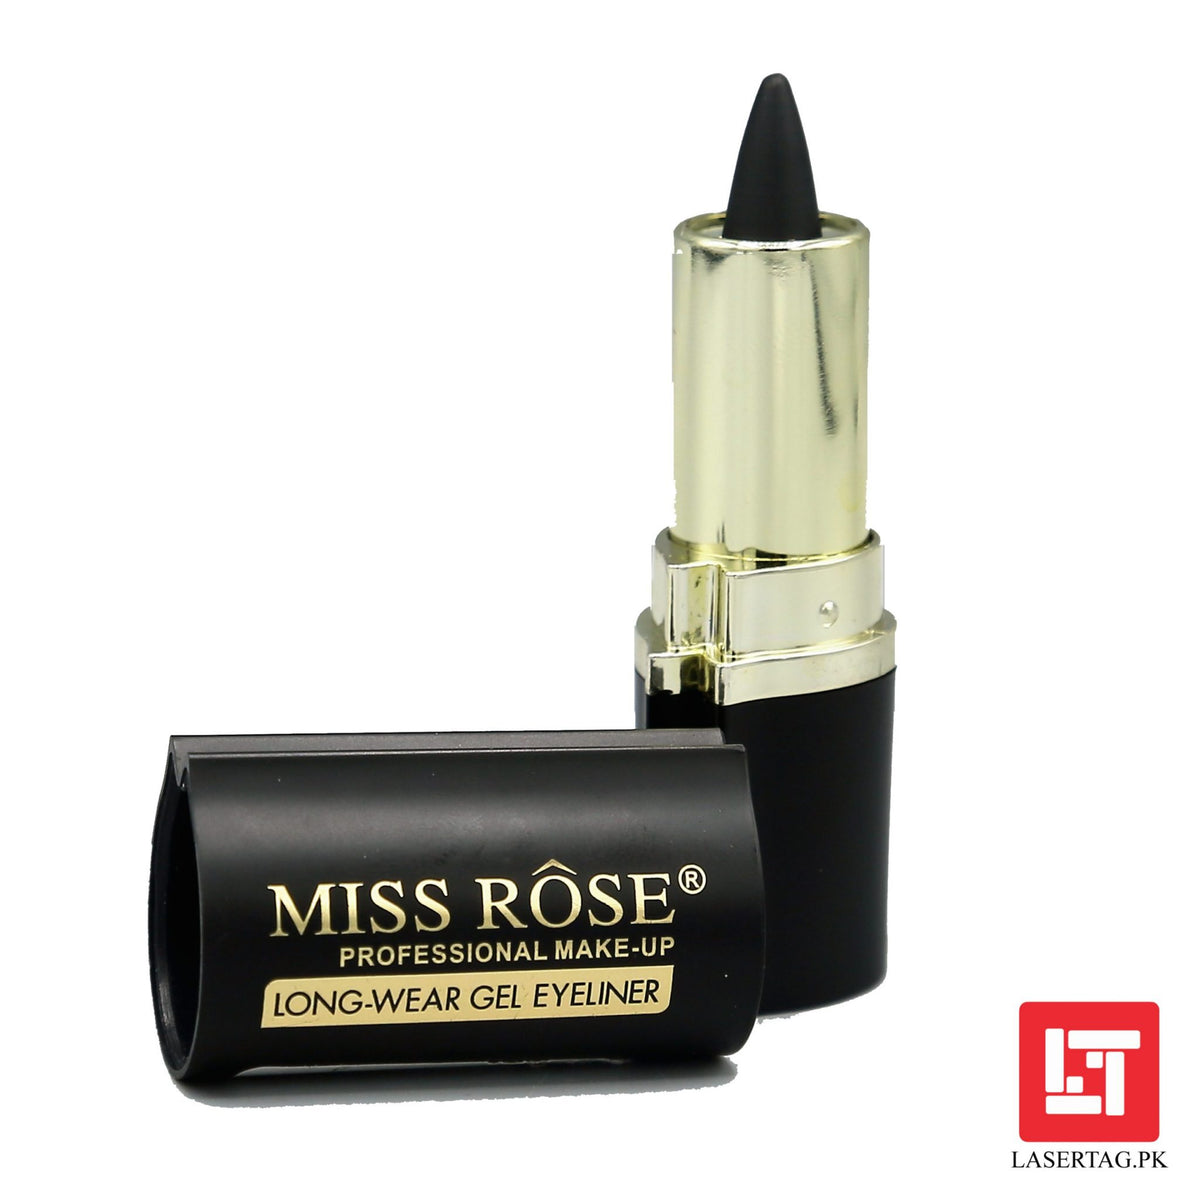 Miss Rose Kajal Black Long Wear Gel Eyeliner 2.5g freeshipping - lasertag.pk